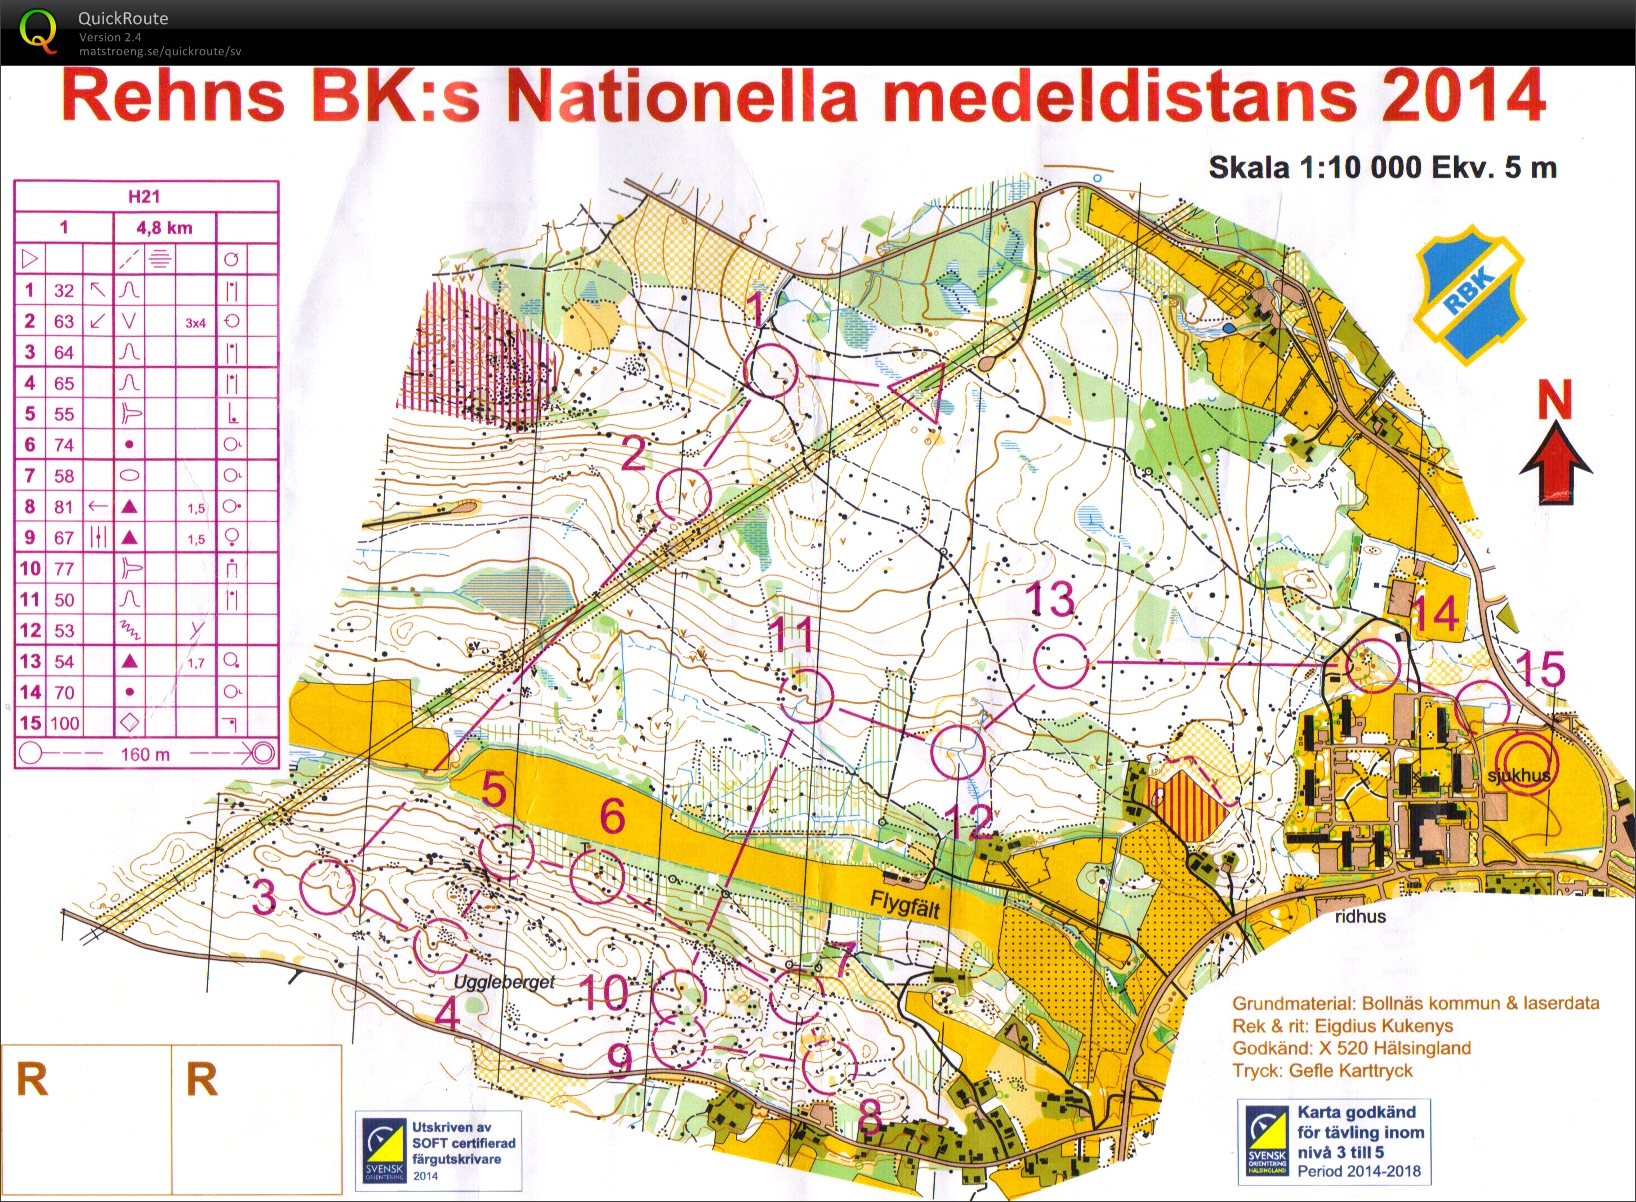 Rehns BK:s nationella medeldistans (31.05.2014)